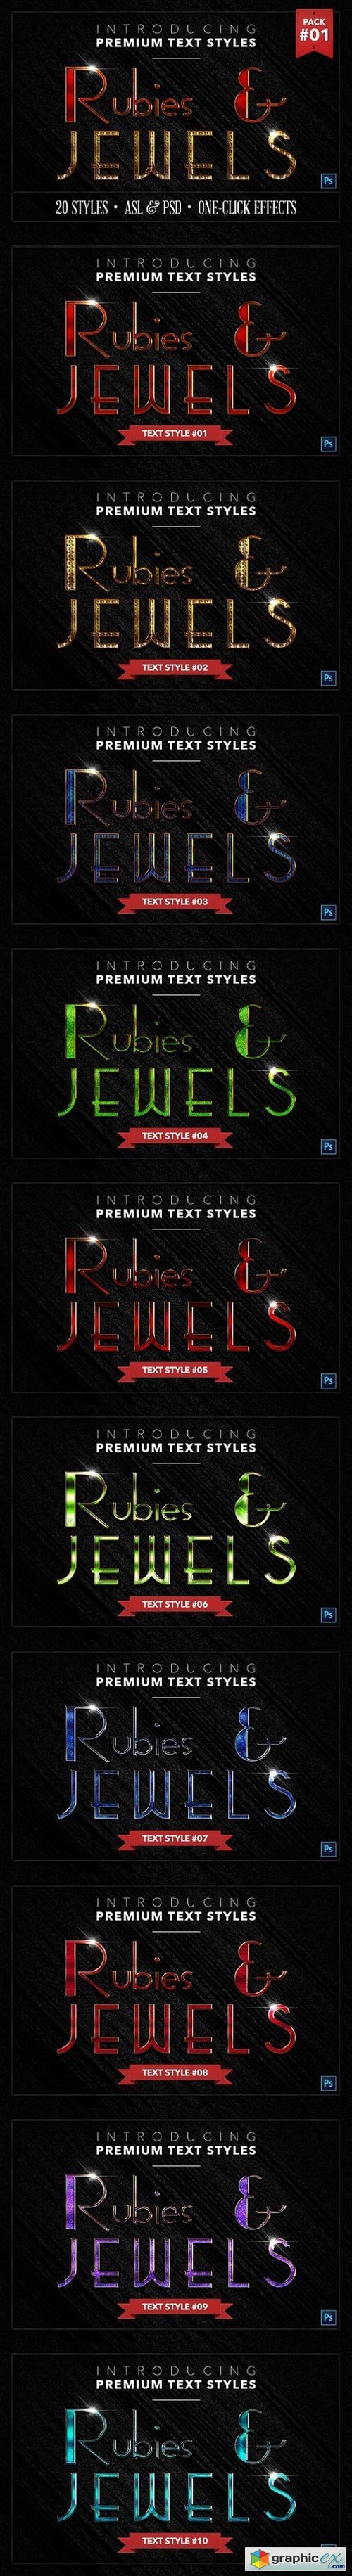 Rubies & Jewels #1 - 20 Styles